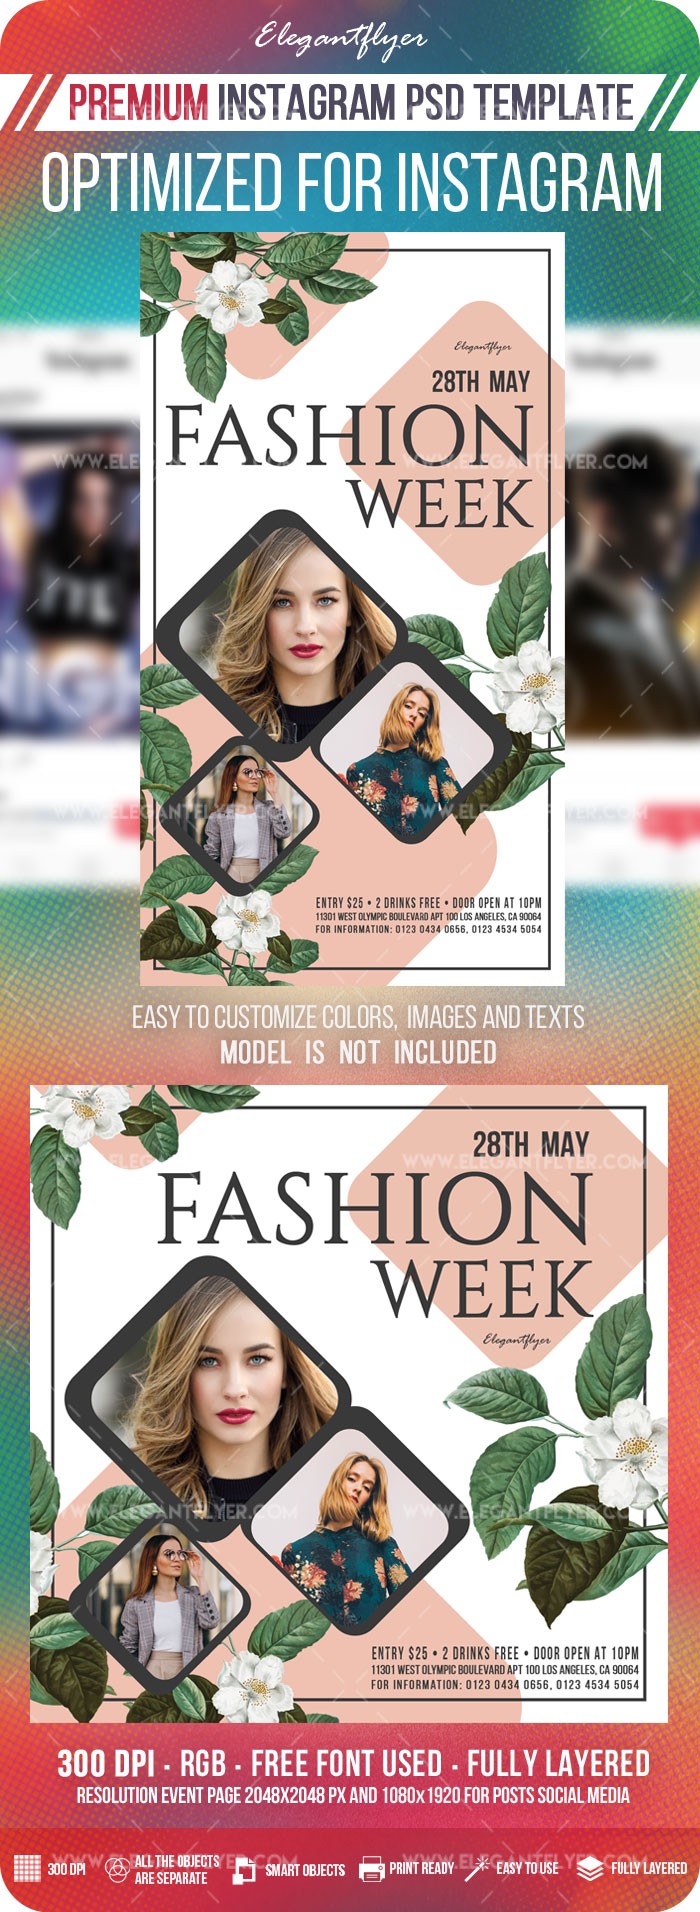 Fashion Week Instagram by ElegantFlyer